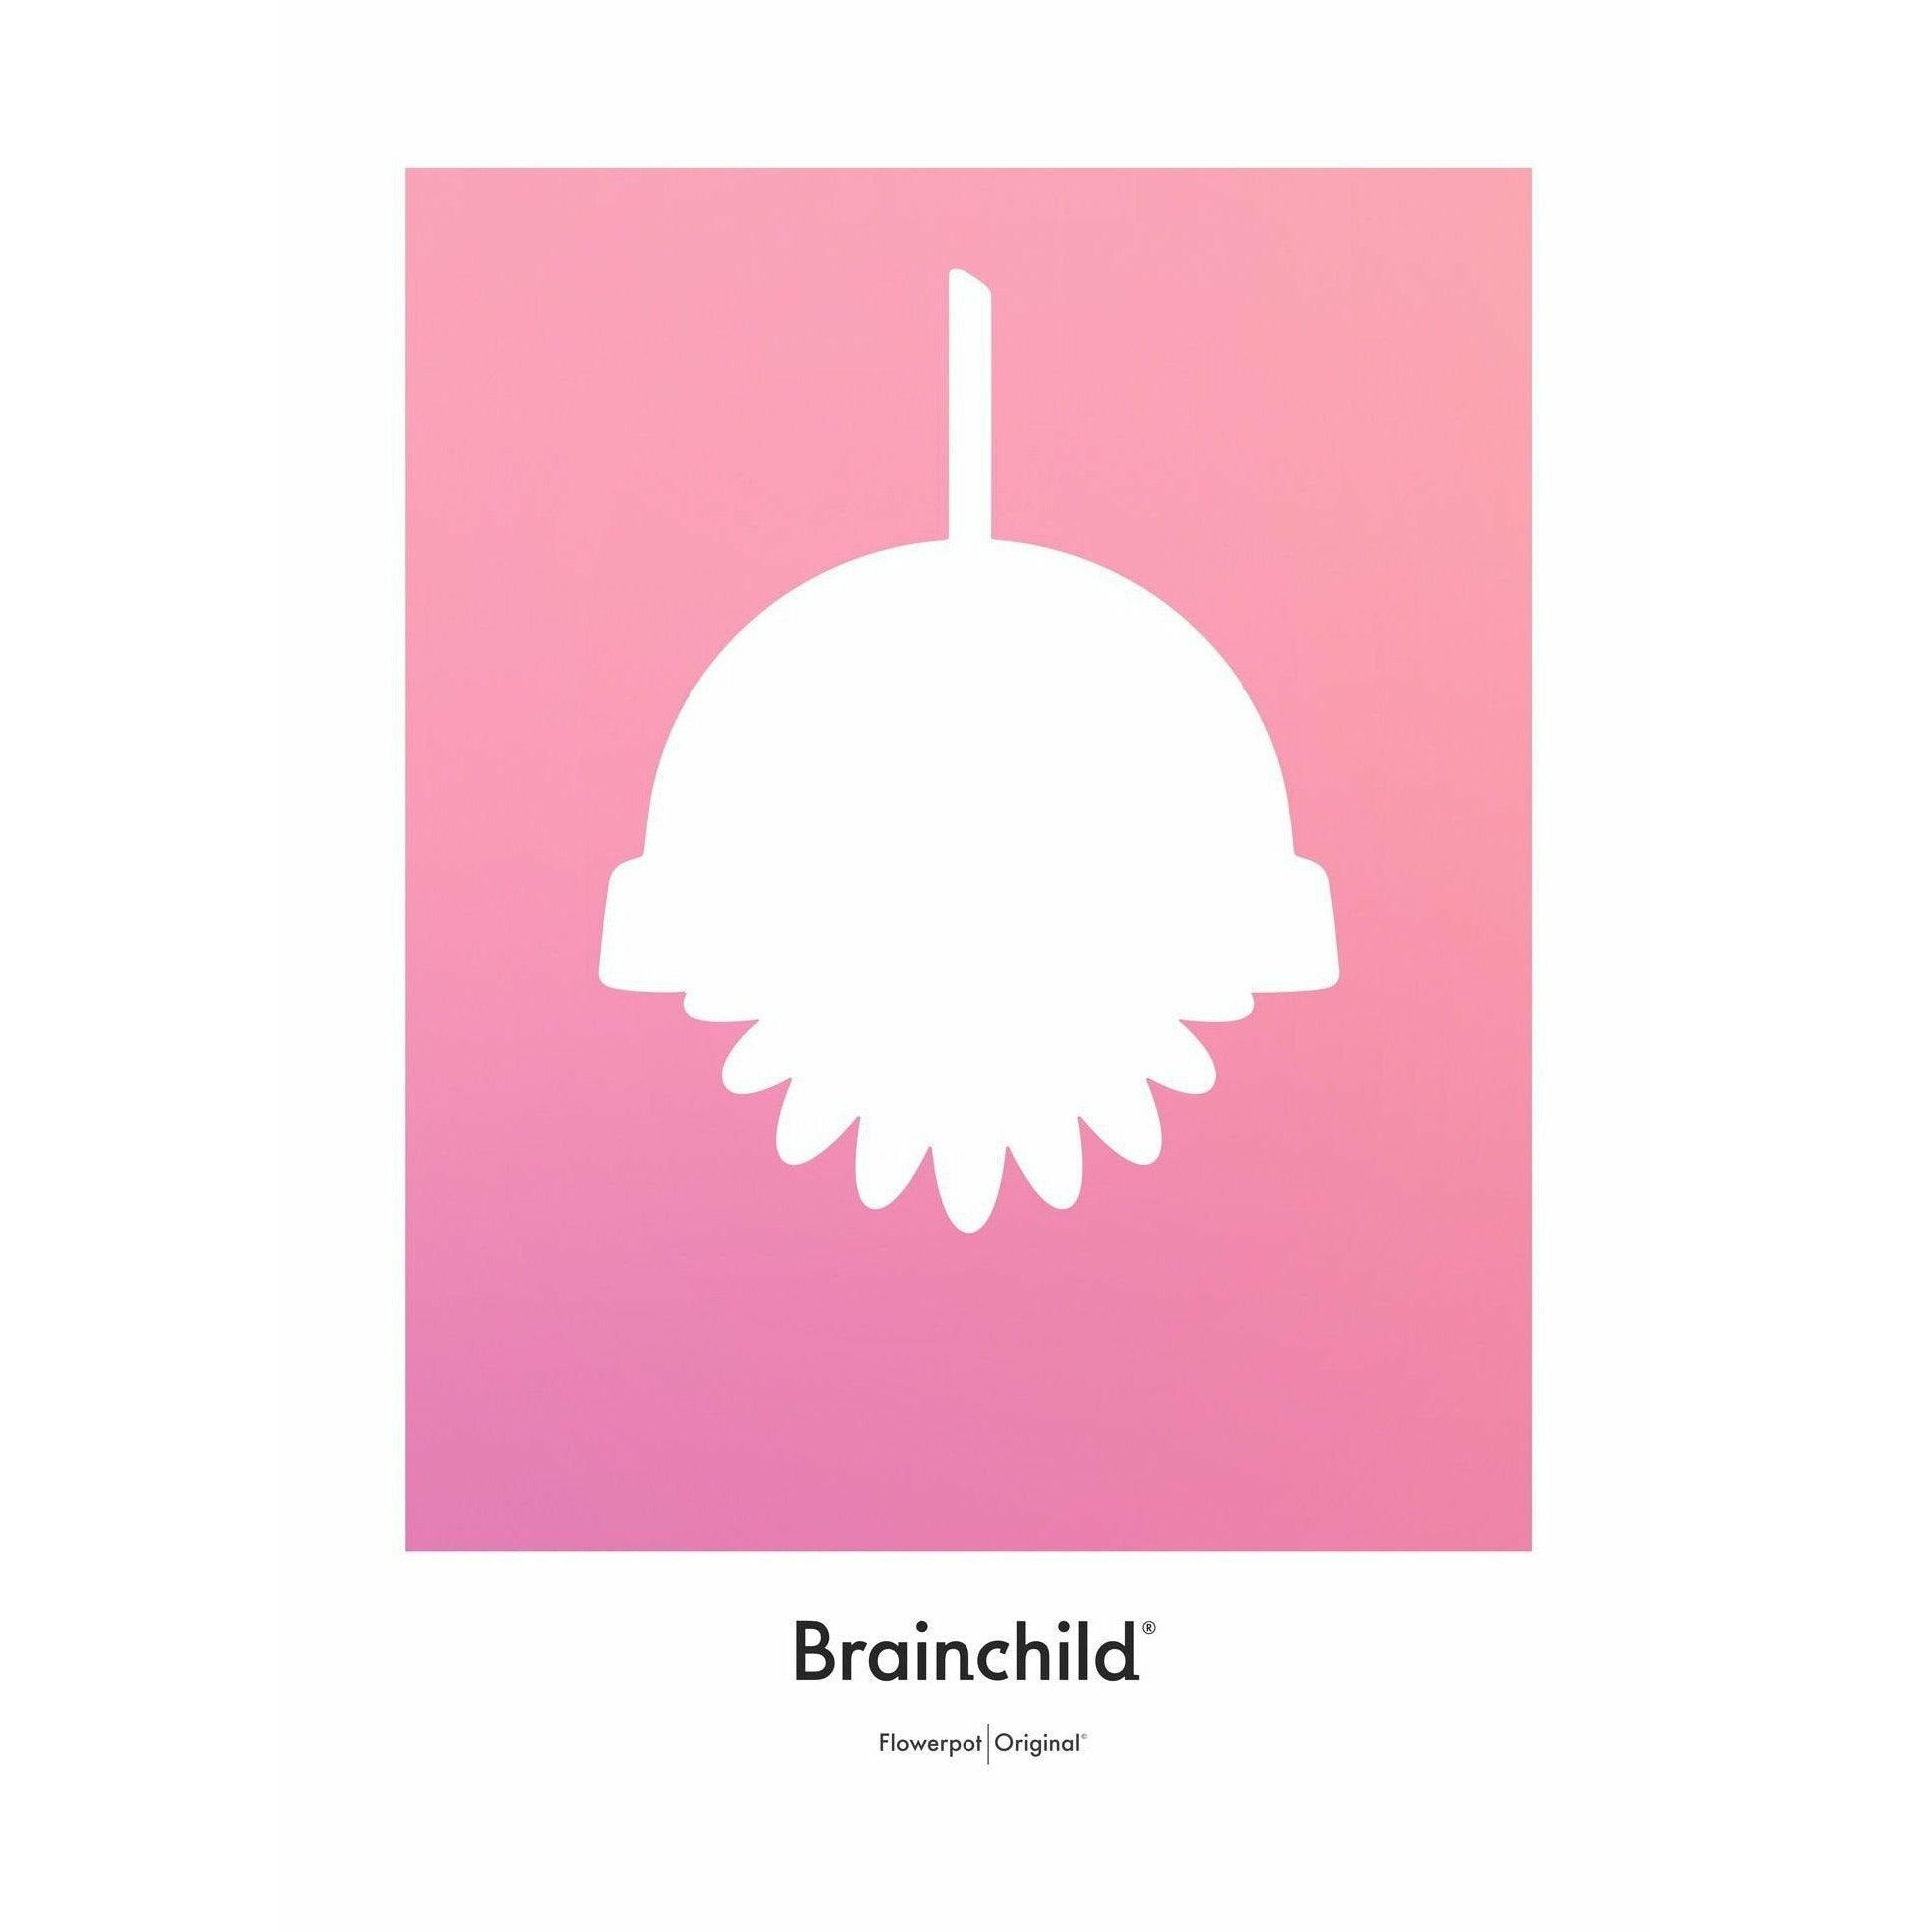 Brainchild Blumentopf Design Icon Poster ohne Rahmen 70 X100 Cm, Rosa